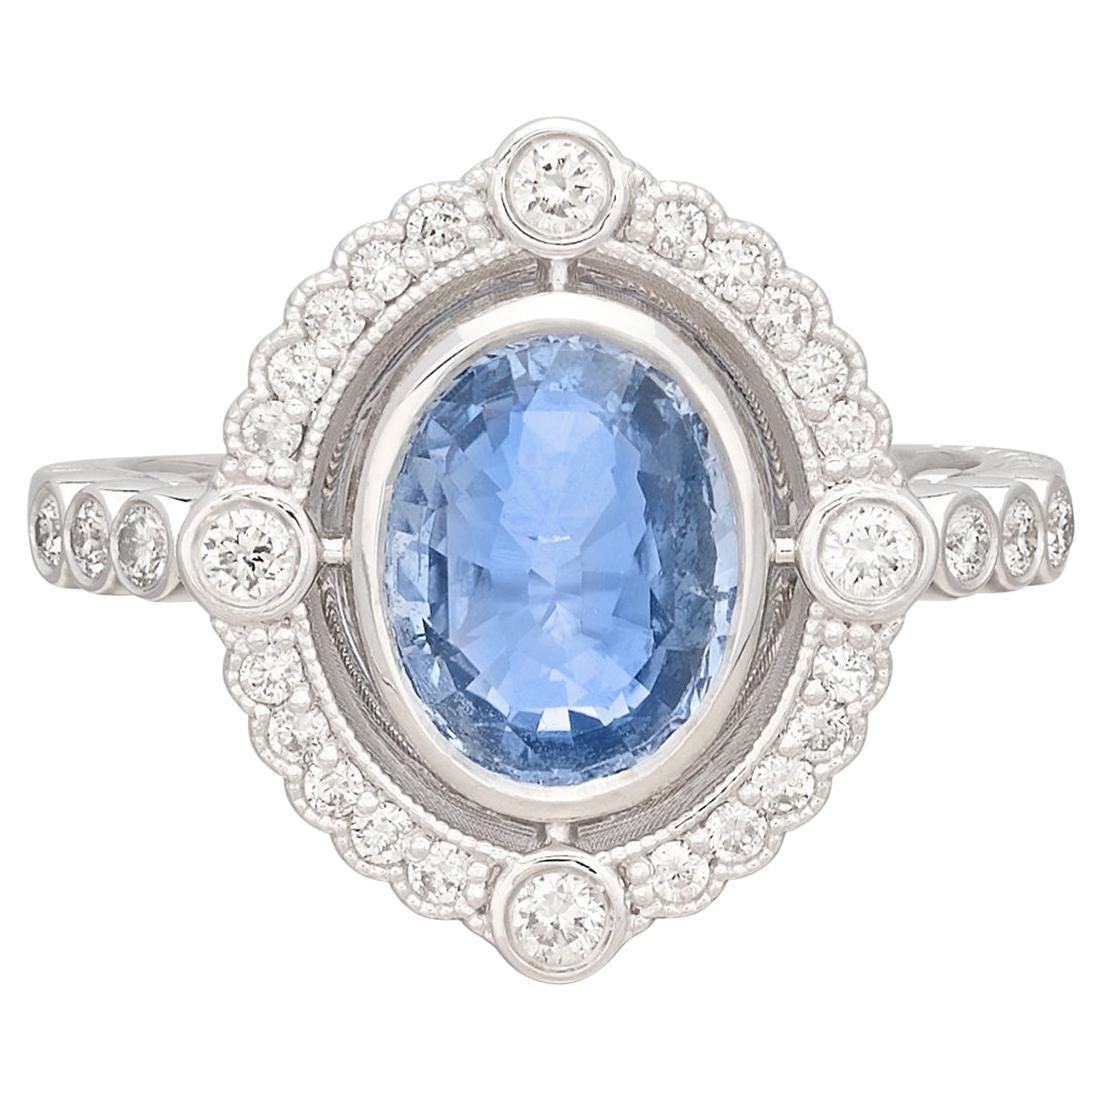 Art Deco Style 2.24ct Sapphire & Diamond Ring